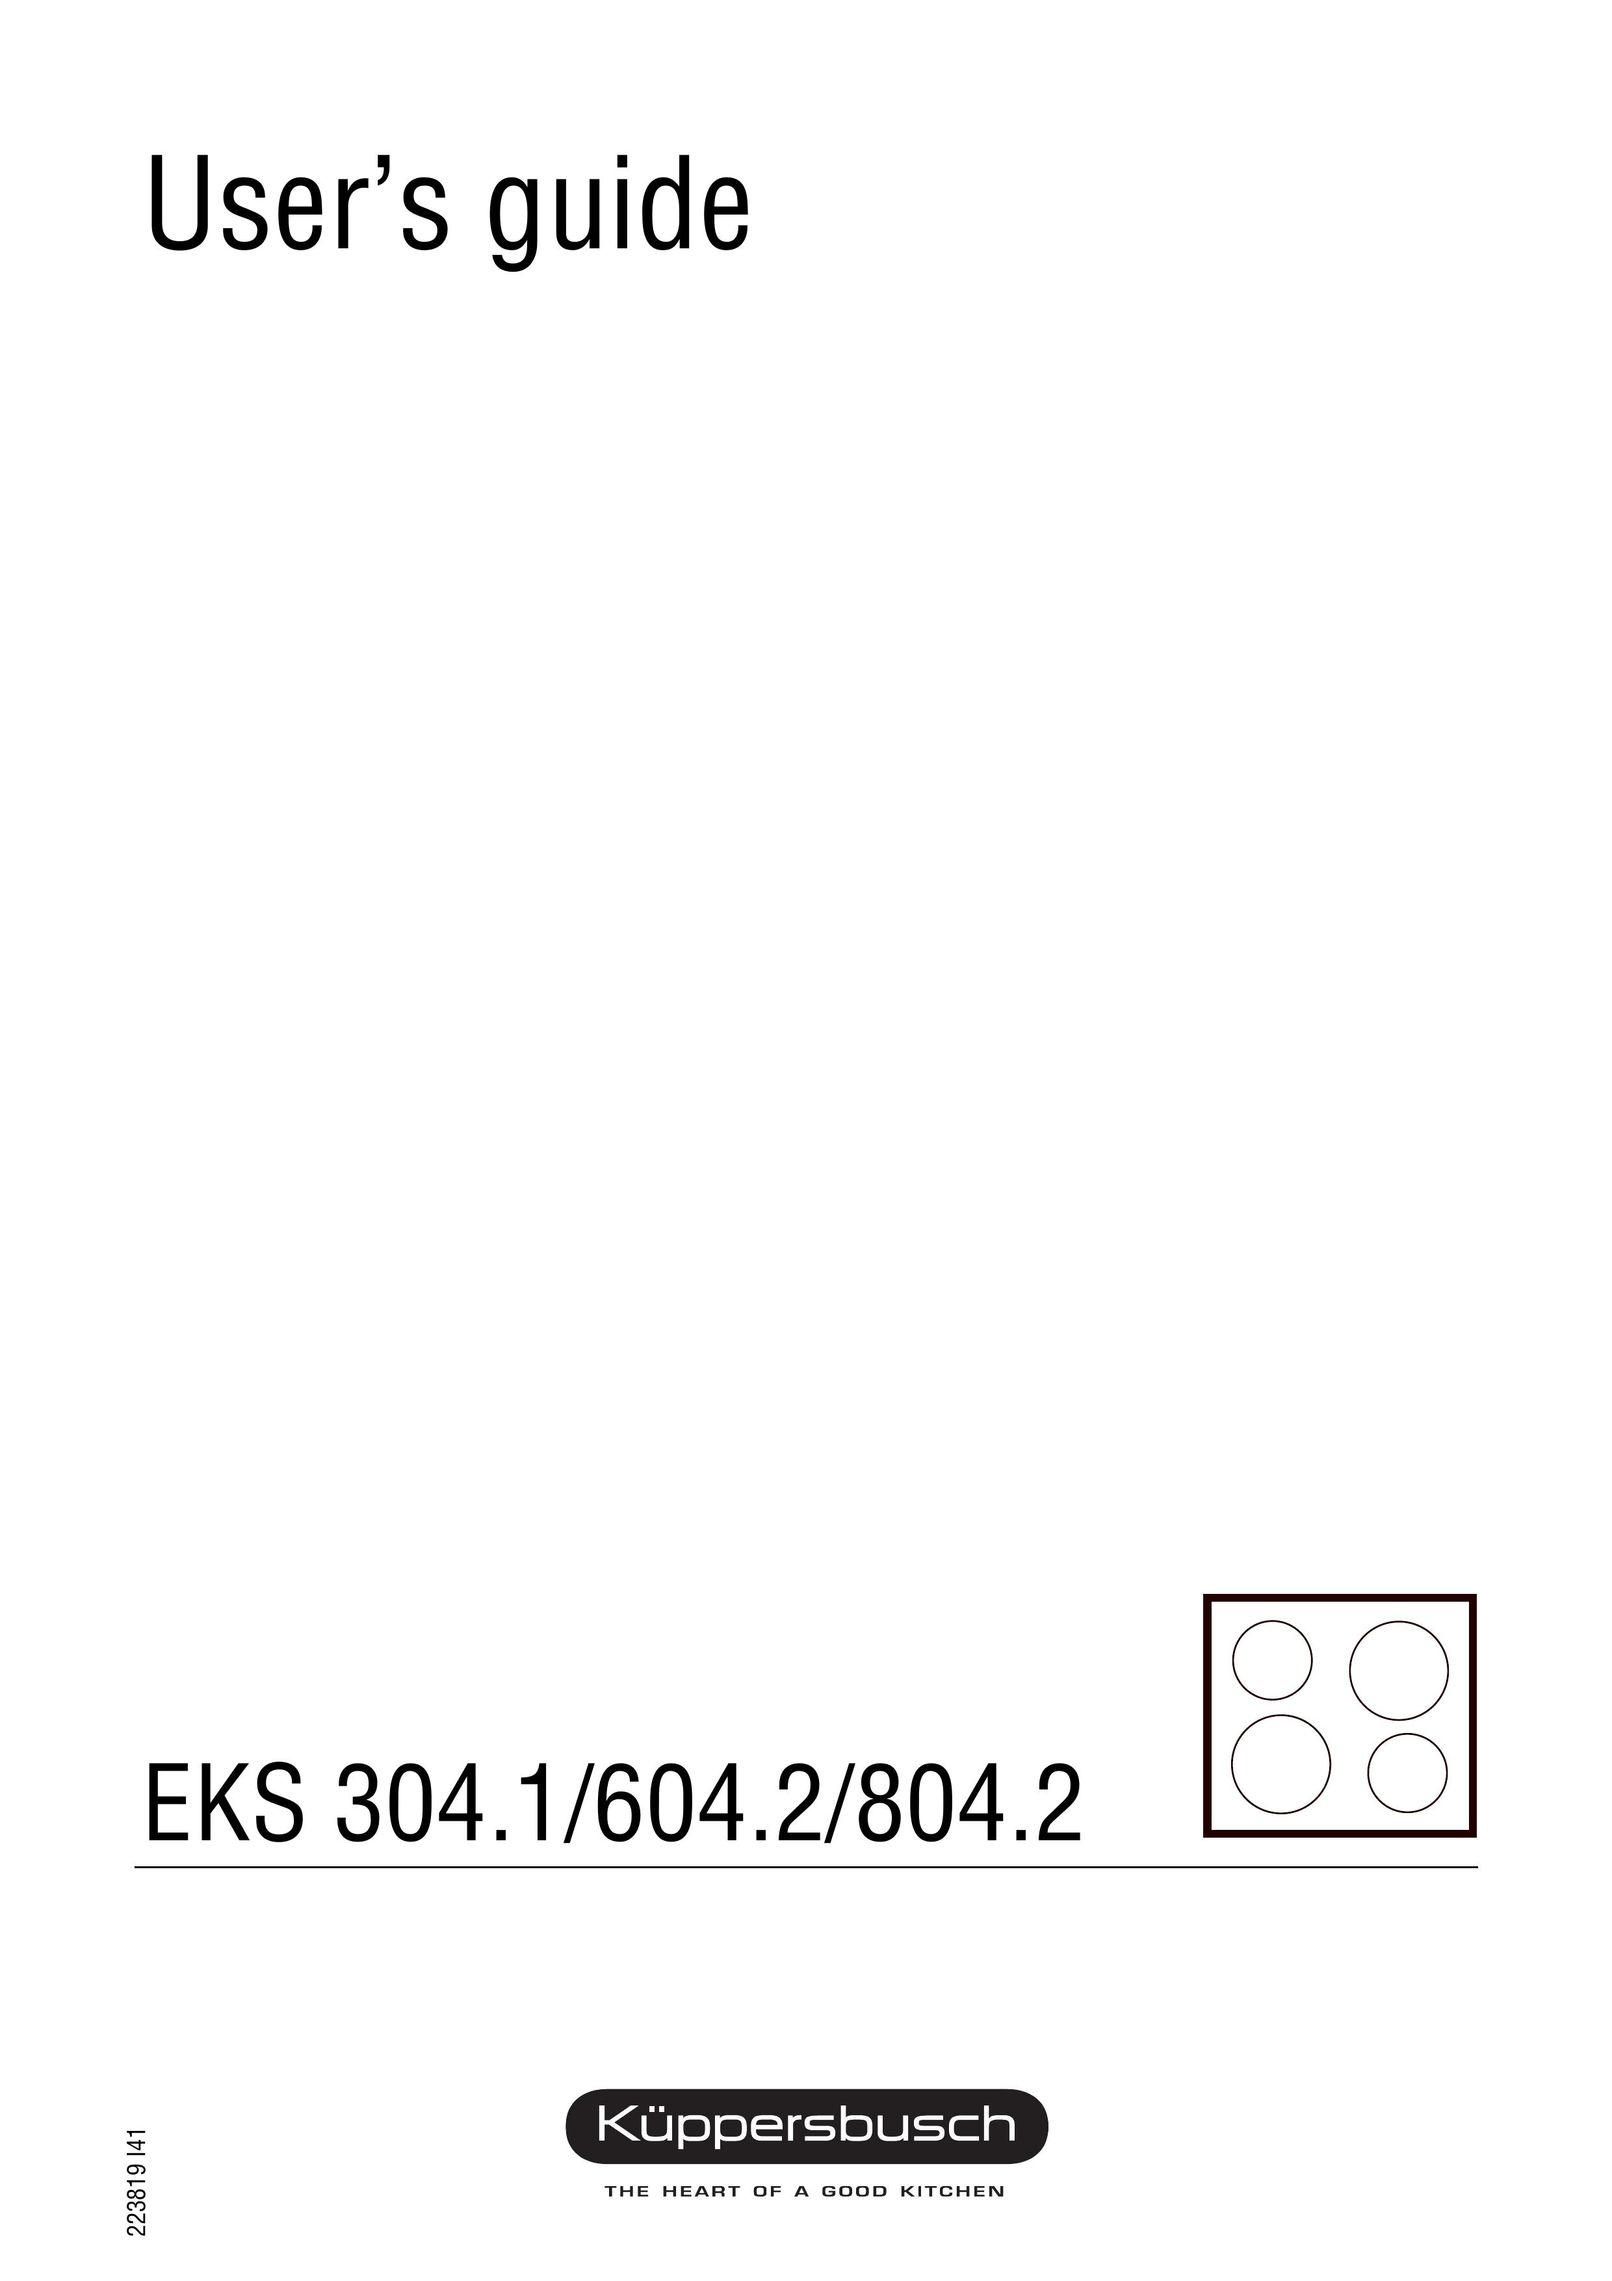 Kuppersbusch USA EKS 604.2 Oven User Manual